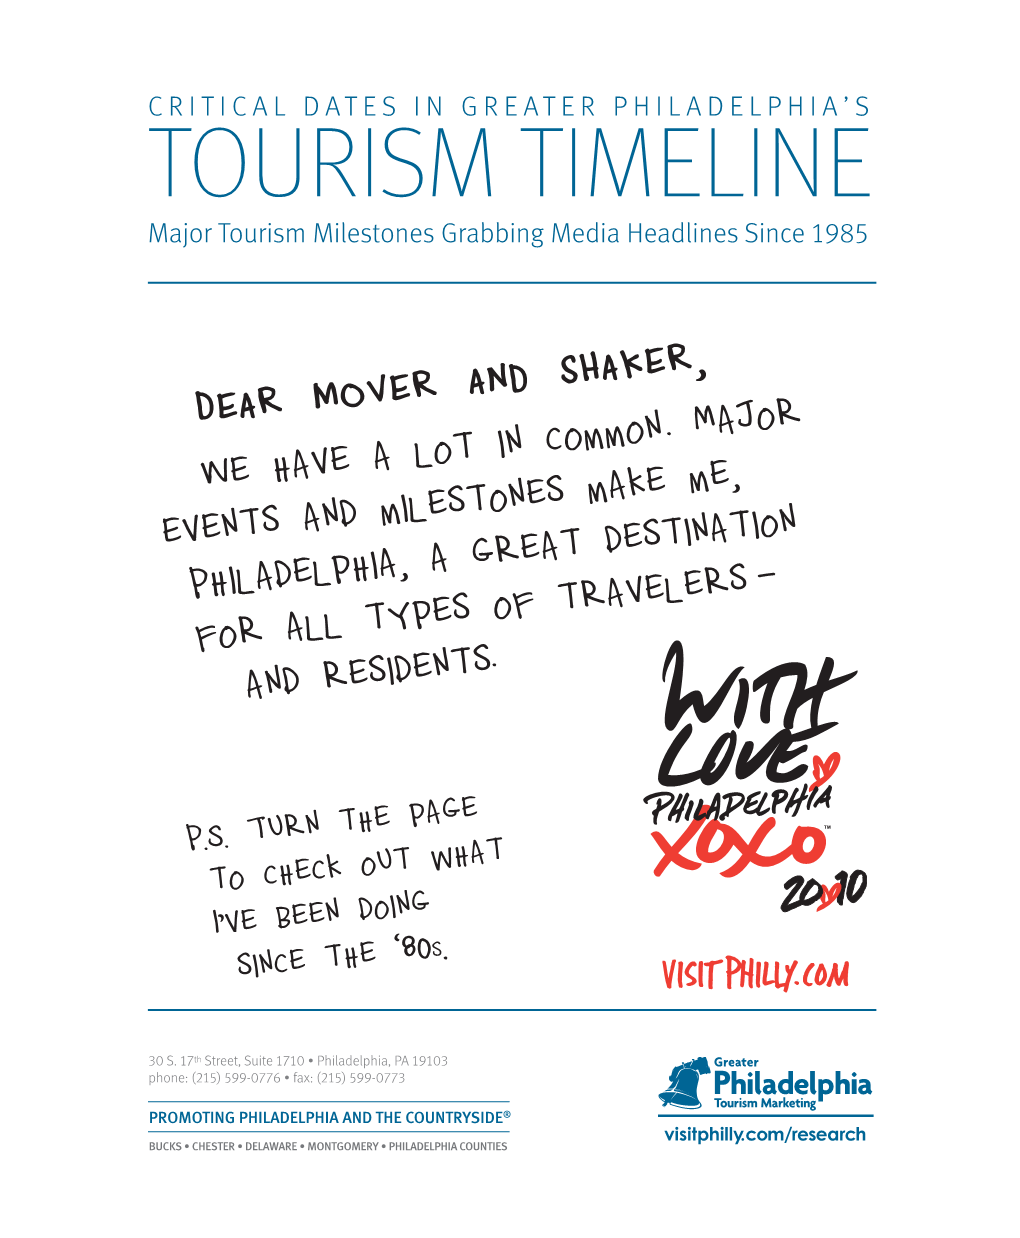 TOURISM TIMELINE Major Tourism Milestones Grabbing Media Headlines Since 1985